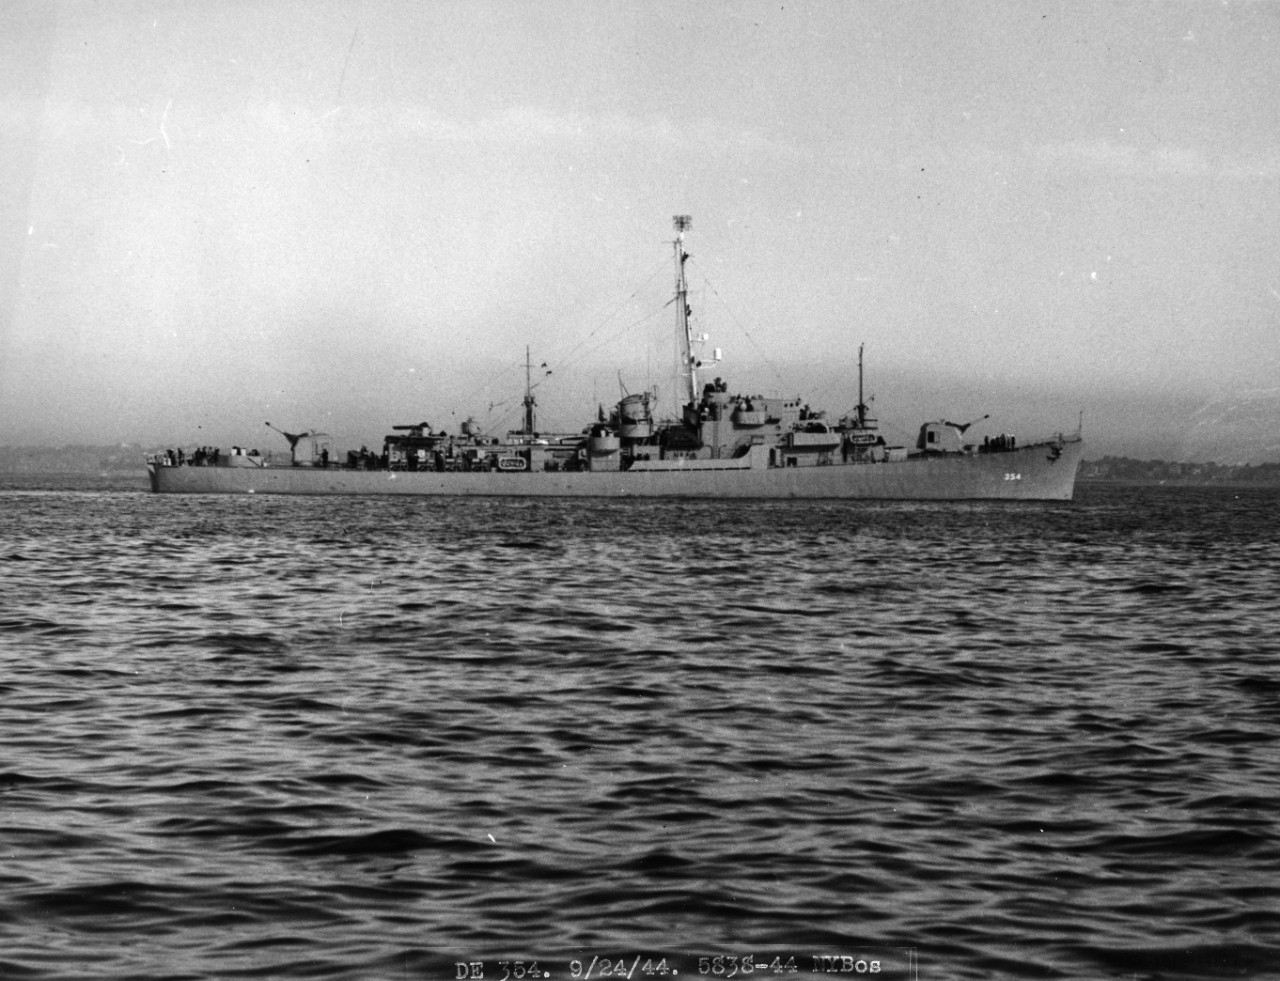 USS Kenneth M. Willett (DE-354), possibly off Boston Navy Yard